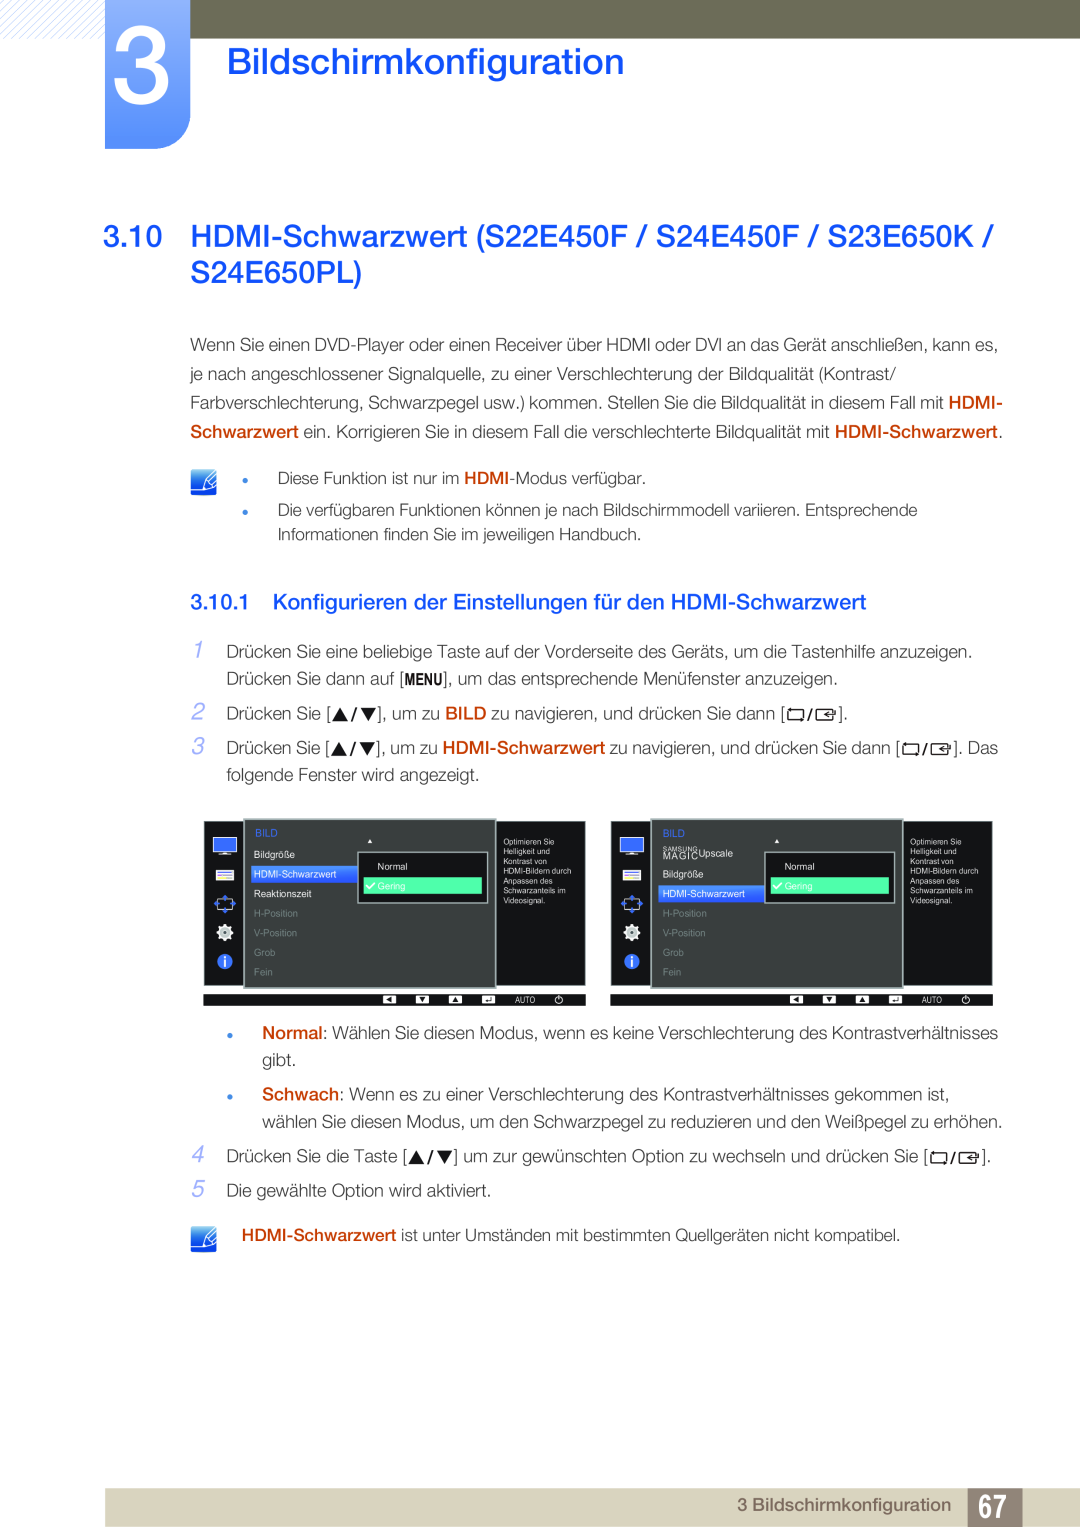 Samsung LS27E65UXS/EN, LS23E65UDC/EN HDMI-Schwarzwert S22E450F / S24E450F / S23E650K / S24E650PL, Bildschirmkonfiguration 